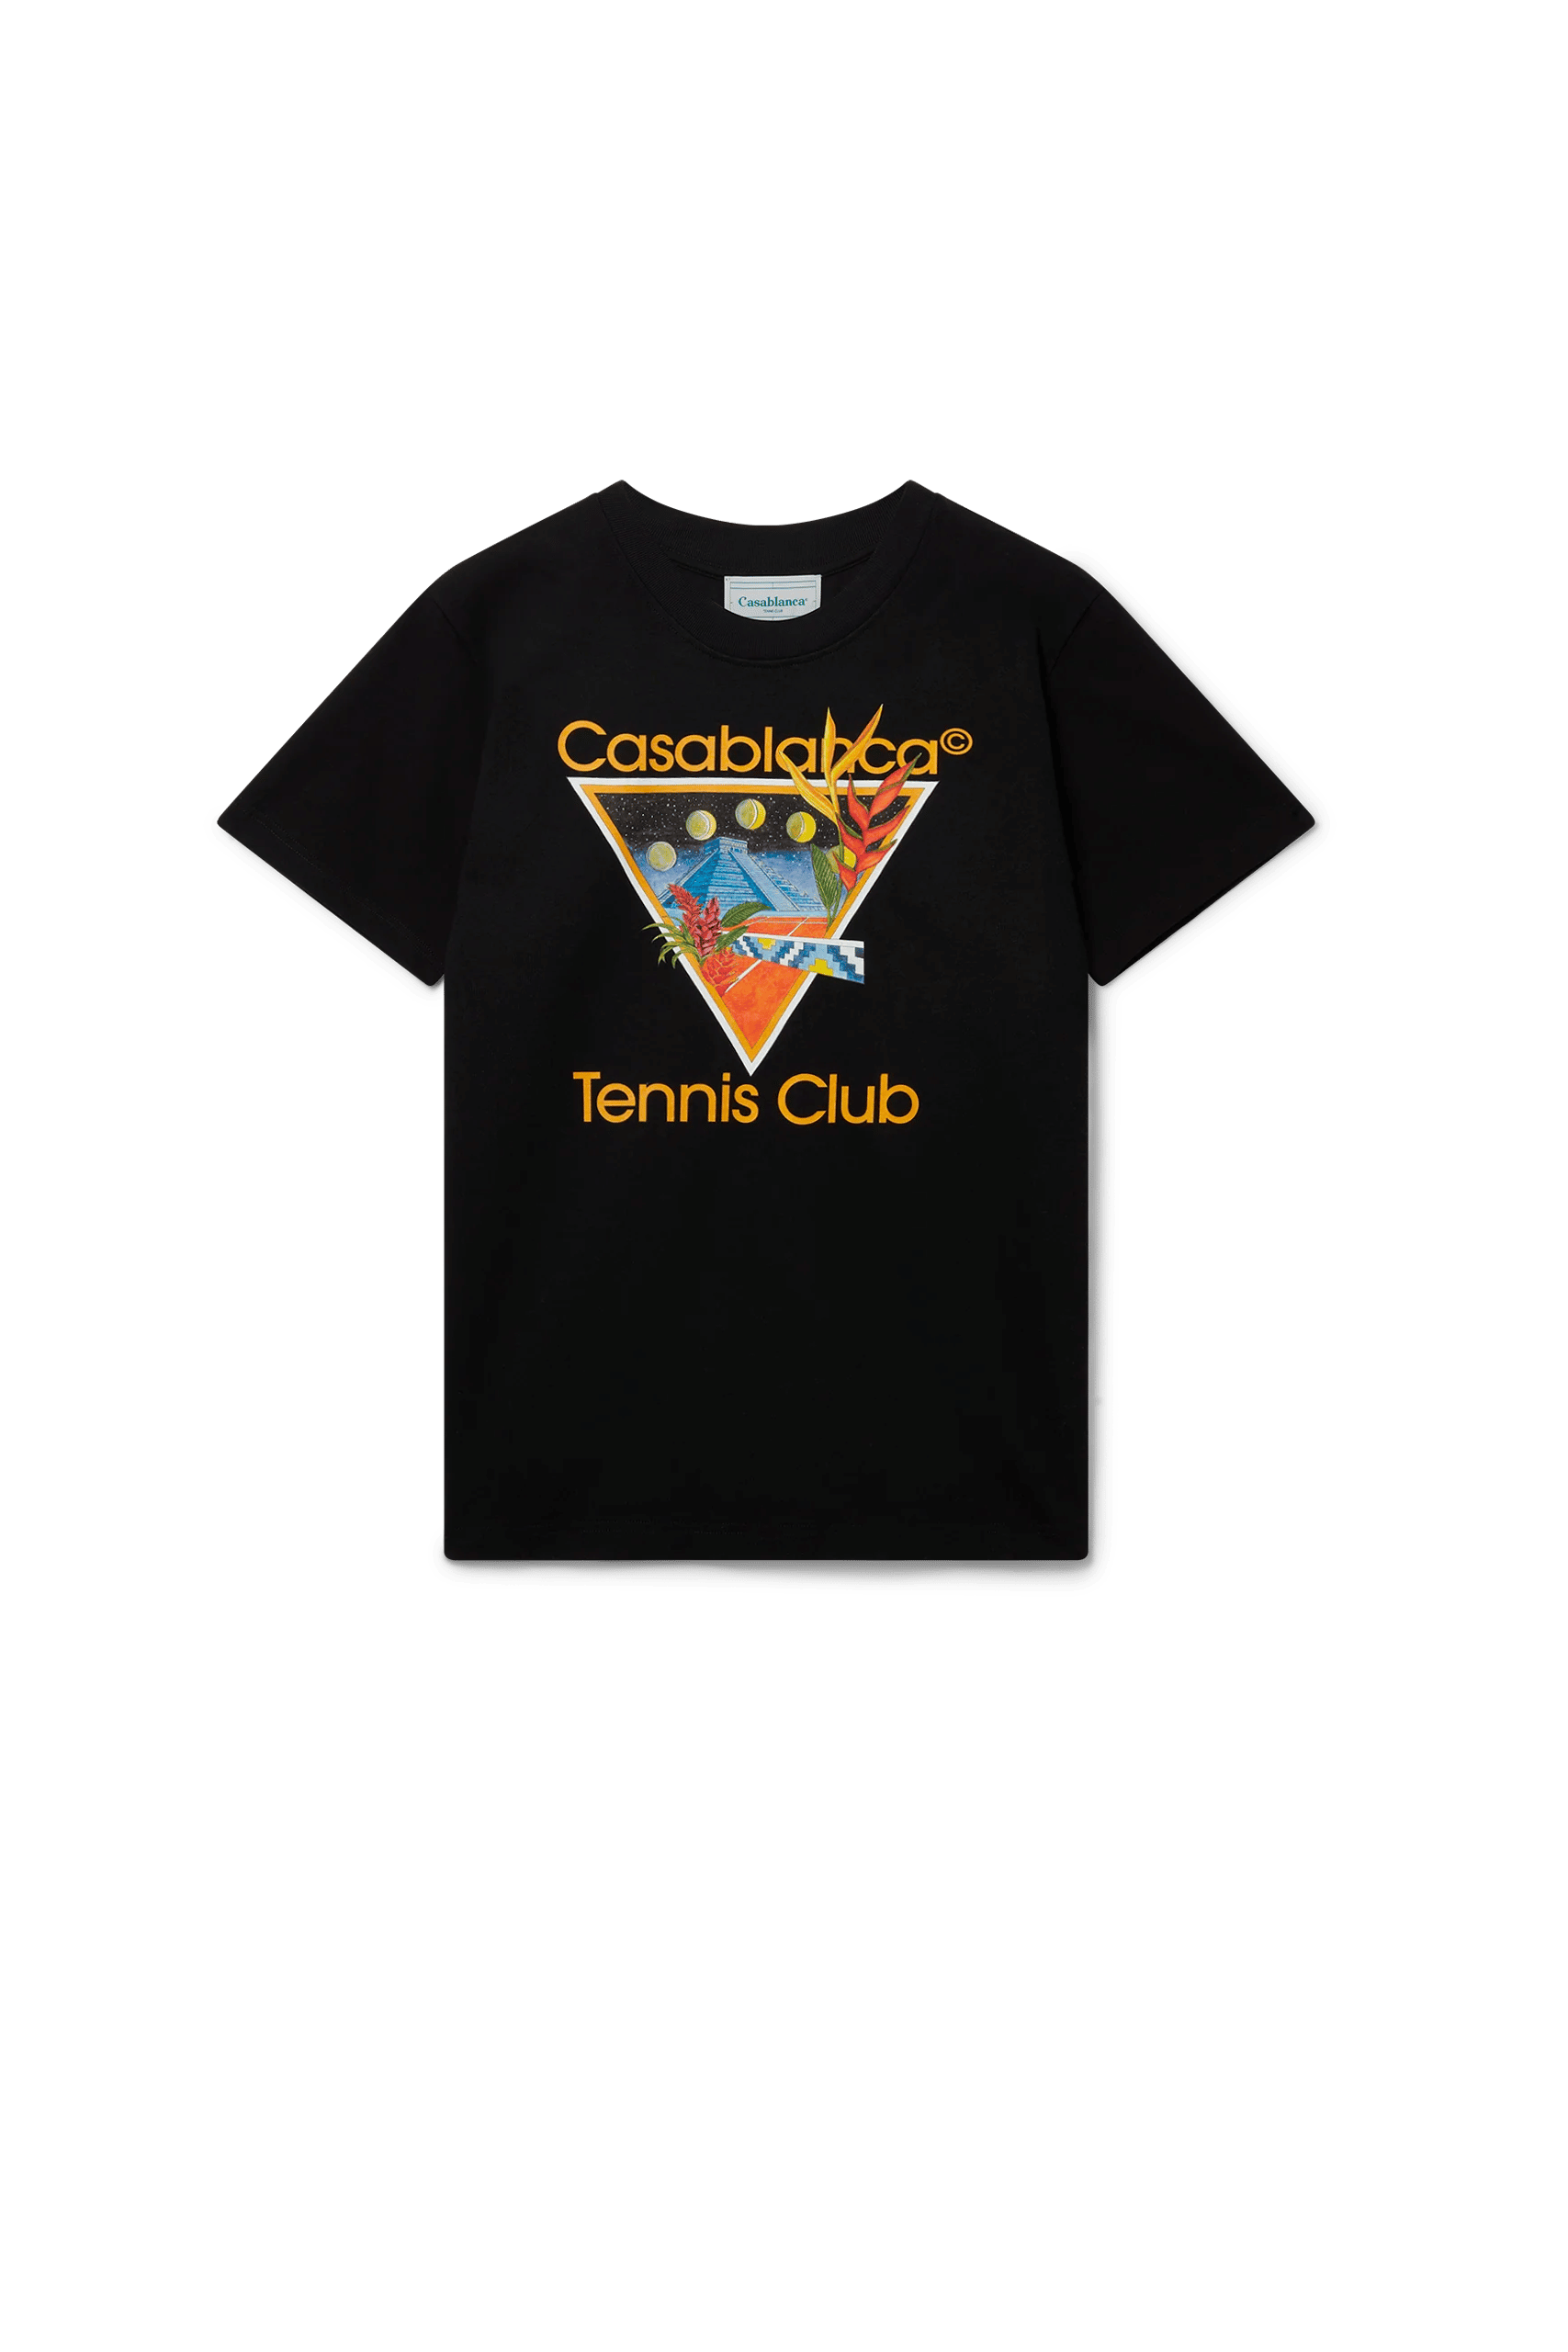 T-shirt - La chaaatte Tennis Academie - Tshirt Corner x Tennis Legend